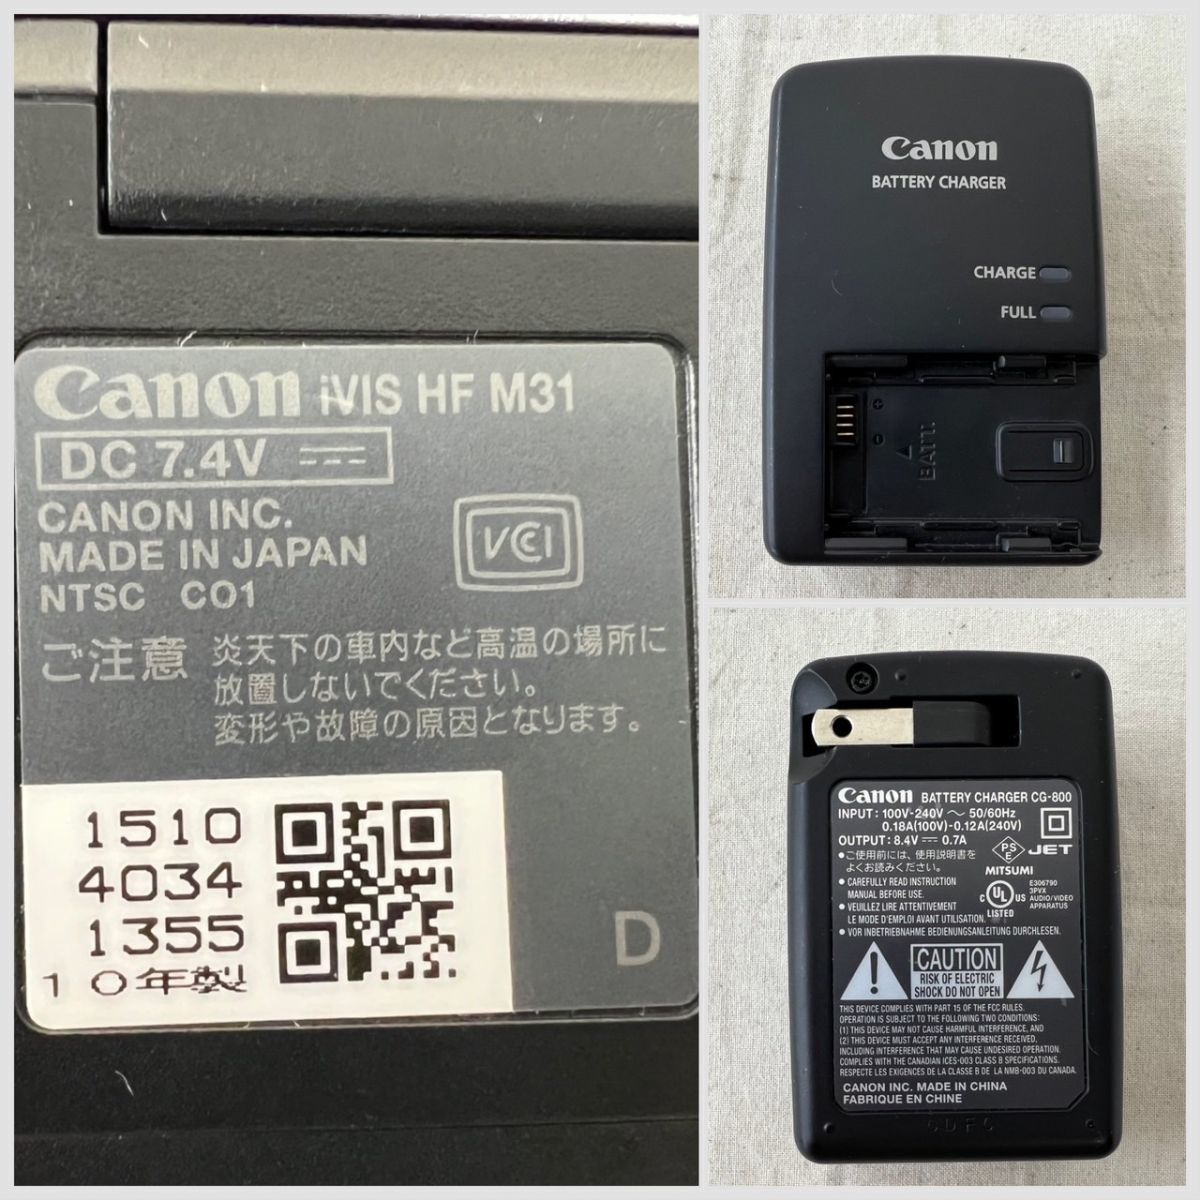 K213-H23-92 Canon キャノン iVIS HF M31 BUILT-IN MEMORY 32GB 15x OPTICAL ZOOM 4.1~61.5mm 1:1.8 151040344355 10年製 ビデオカメラ_画像10